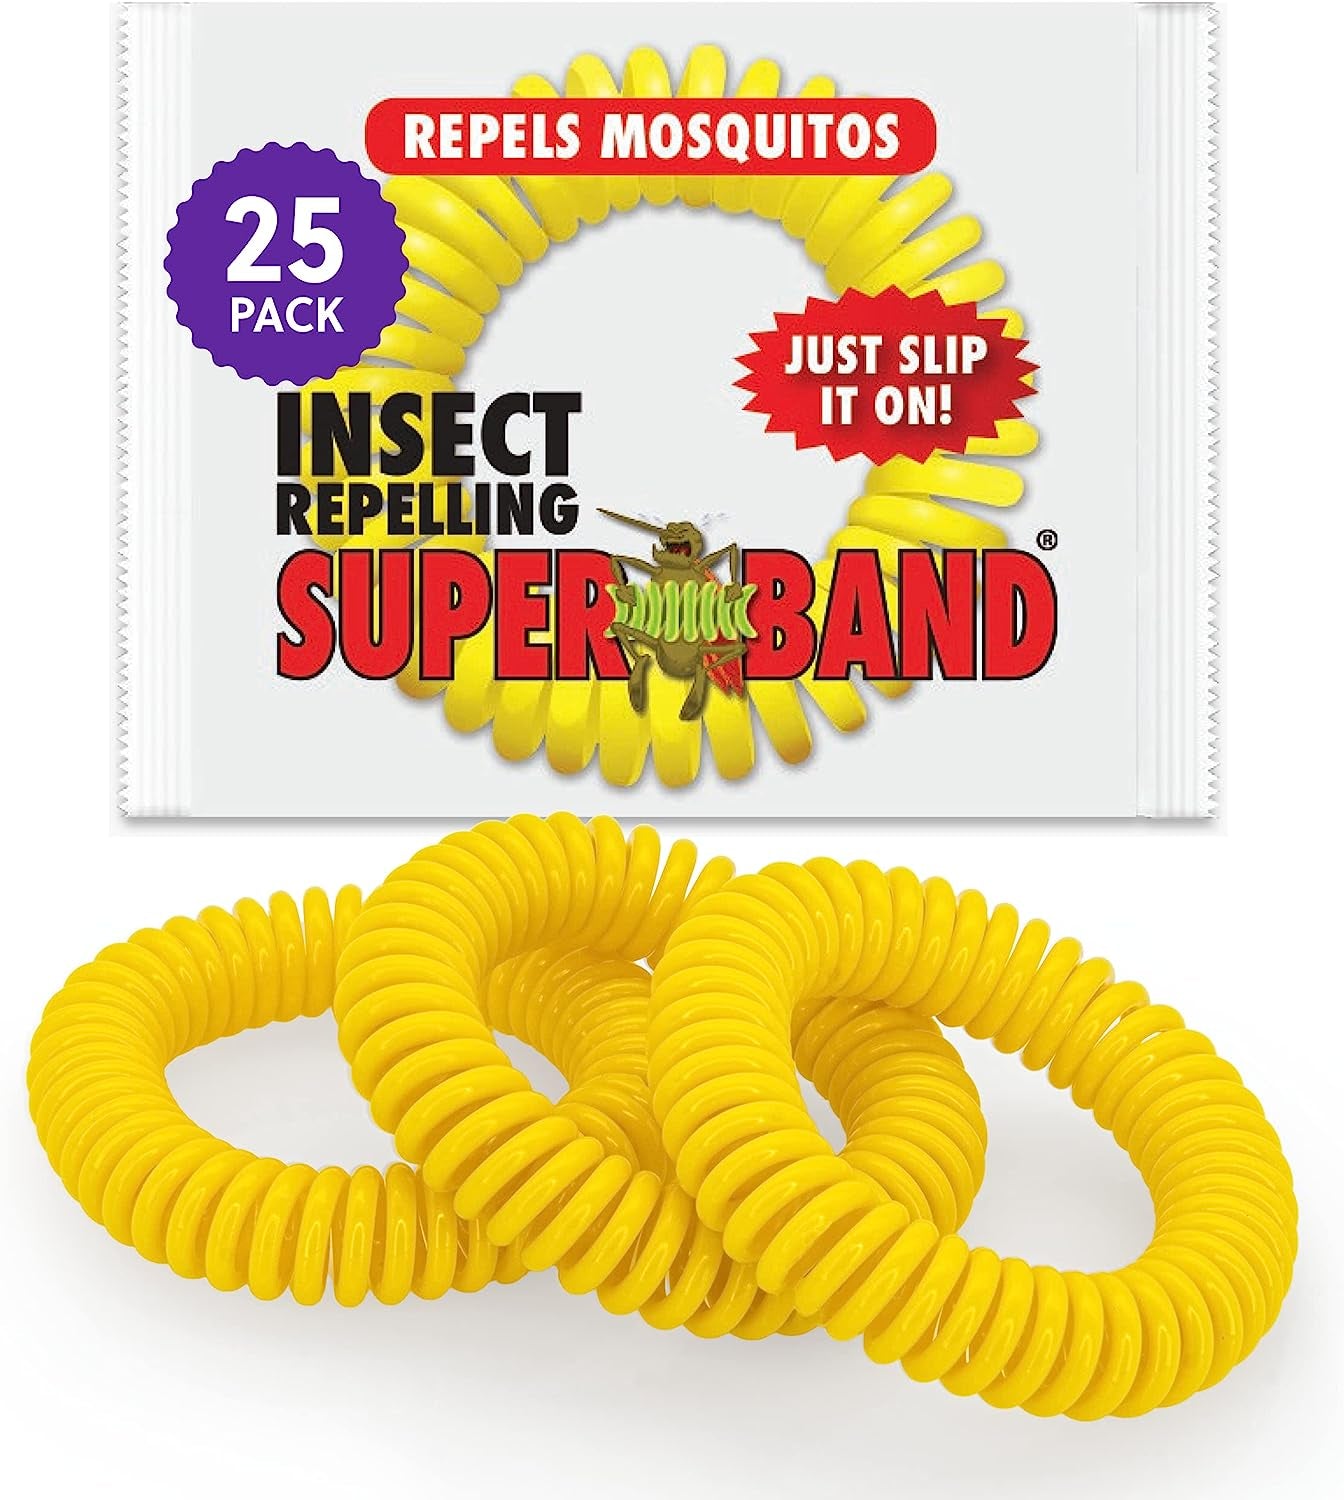 Superband Premium Insect Repellent Bracelet: Assorted Colors (10)